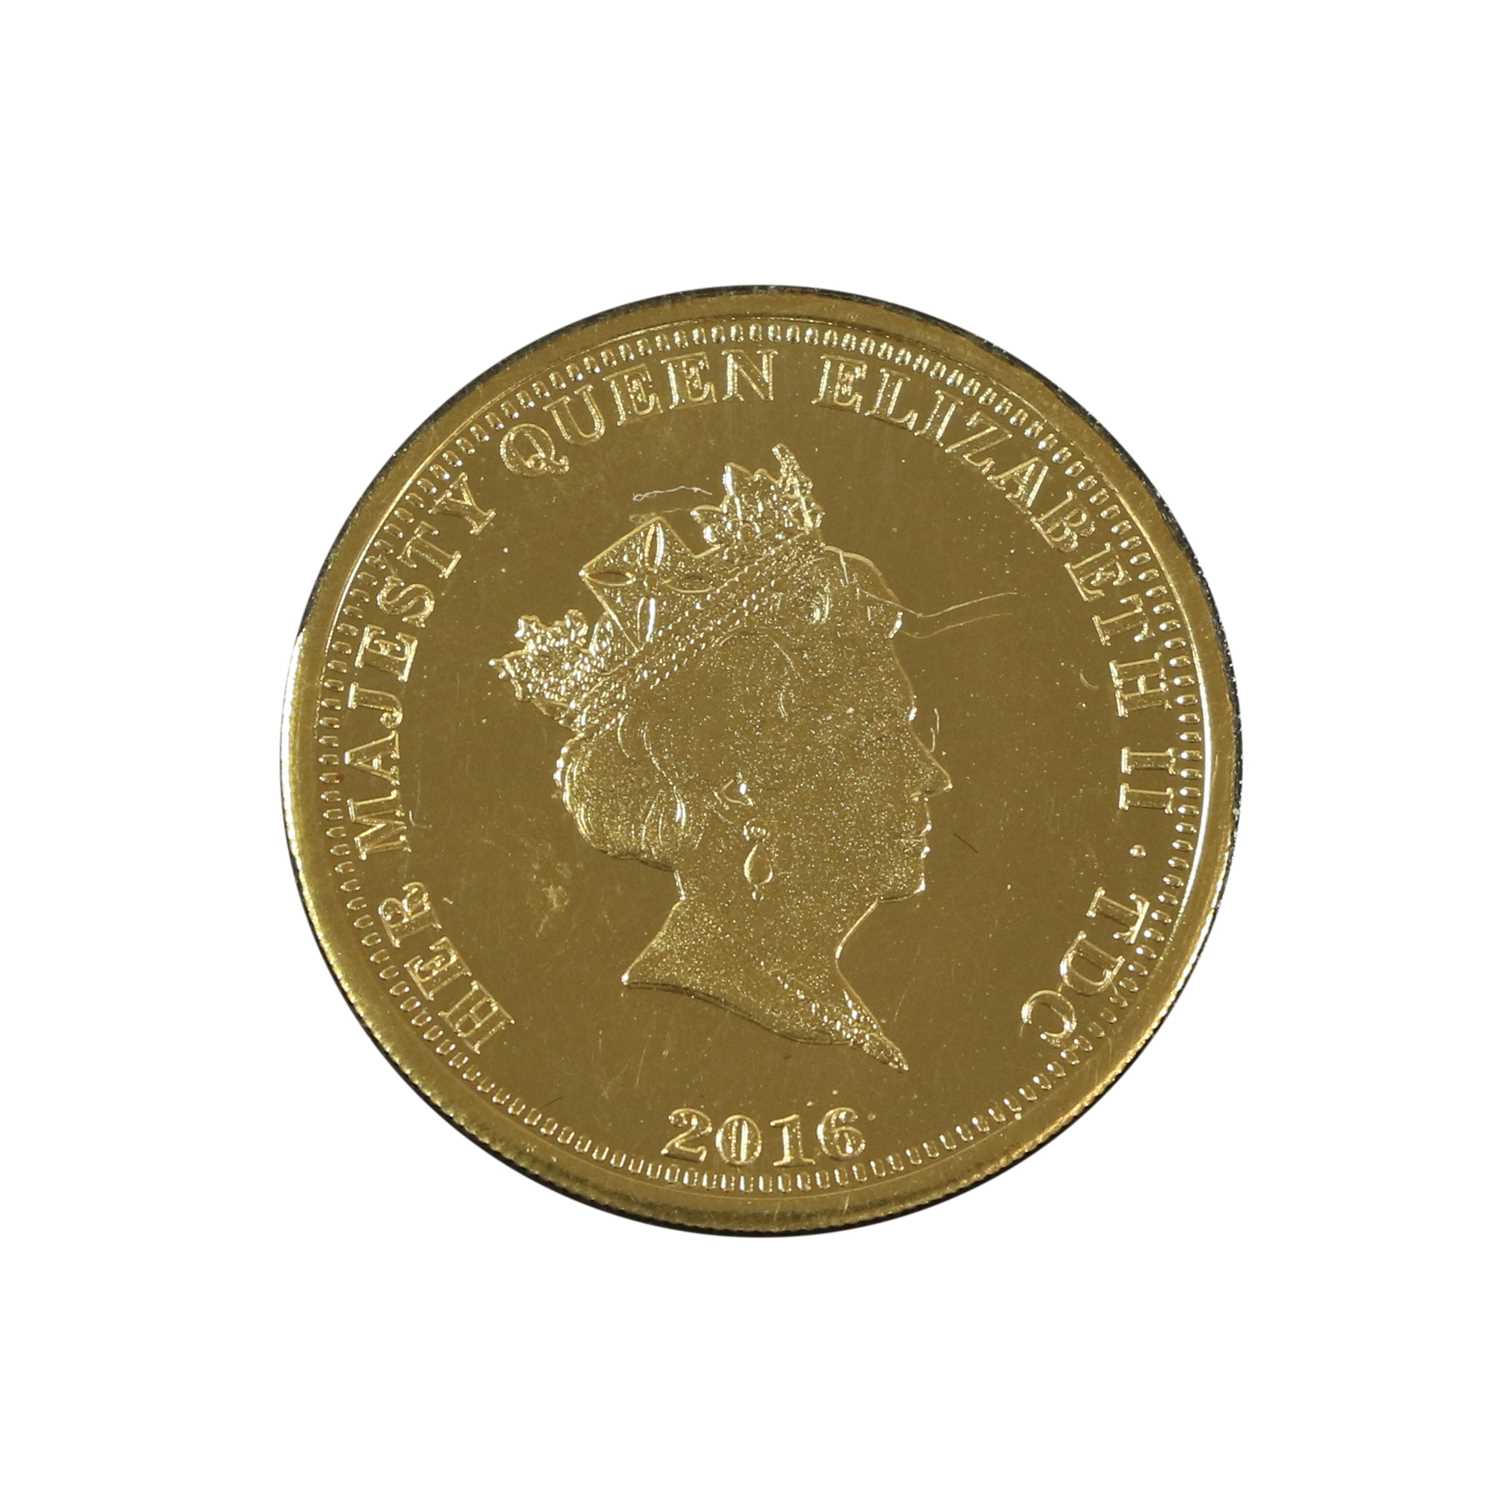 Tristan da Cunha, Gold Proof Half Sovereign 2016 (.916 [22ct] gold, 19.3mm, 4g) 'Queen's 90th